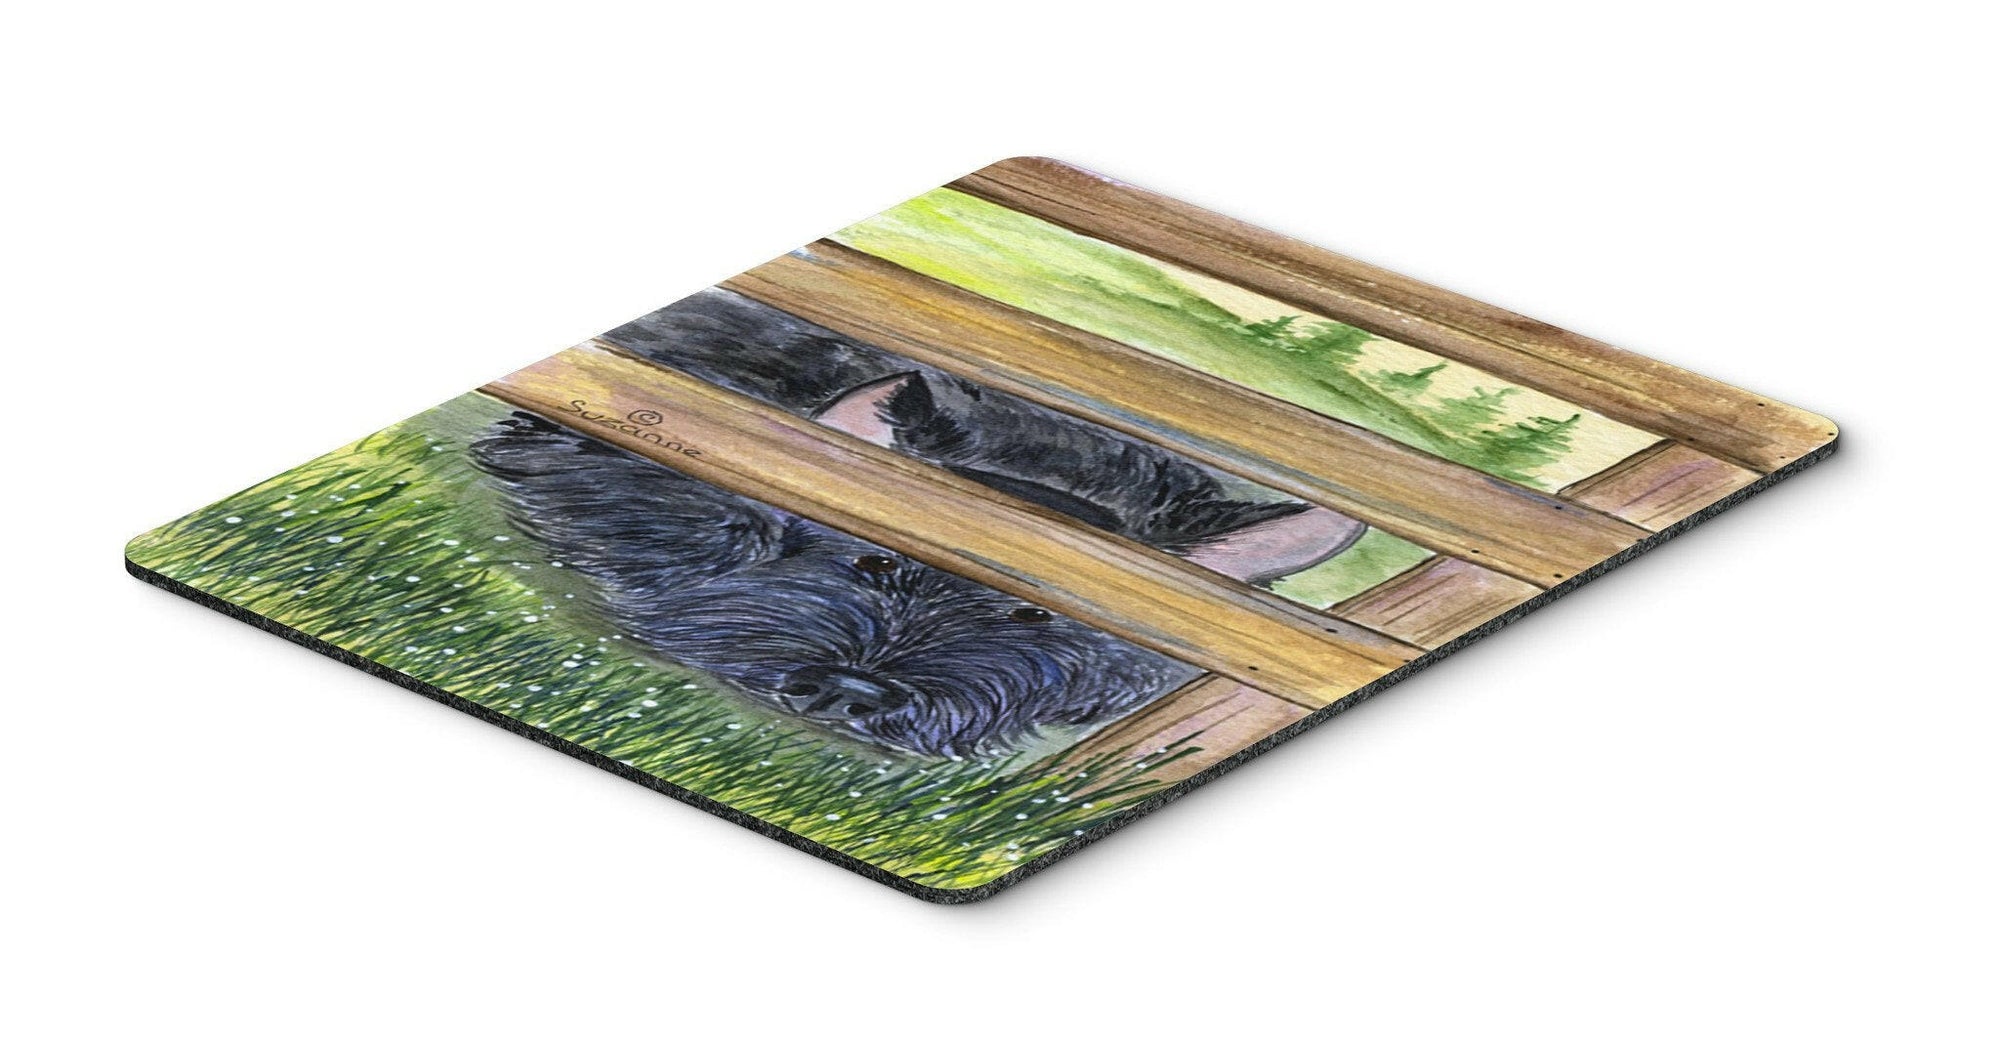 Scottish Terrier Mouse Pad / Hot Pad / Trivet by Caroline's Treasures